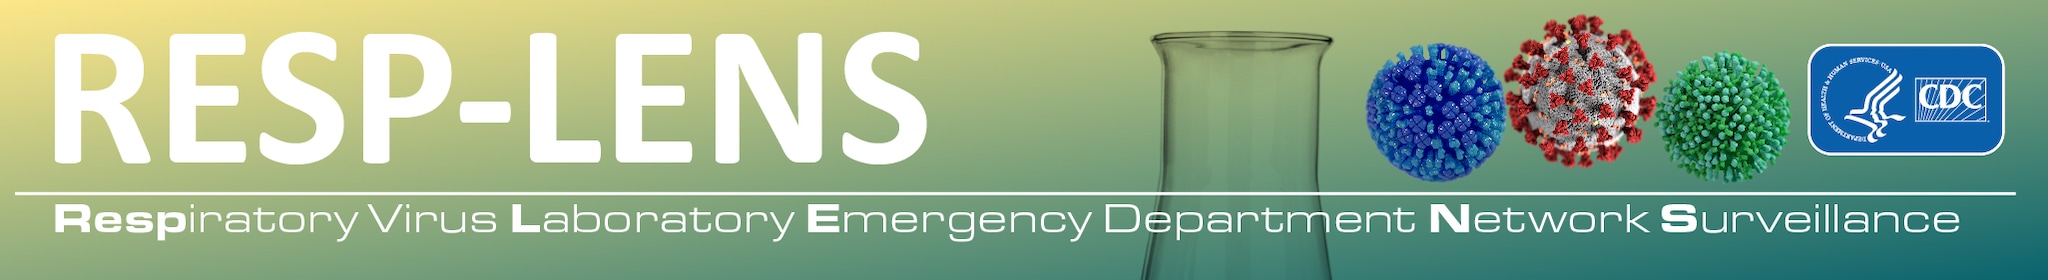 Respiratory Virus Laboratory Emergency Department Network Surveillance (RESP-LENS)